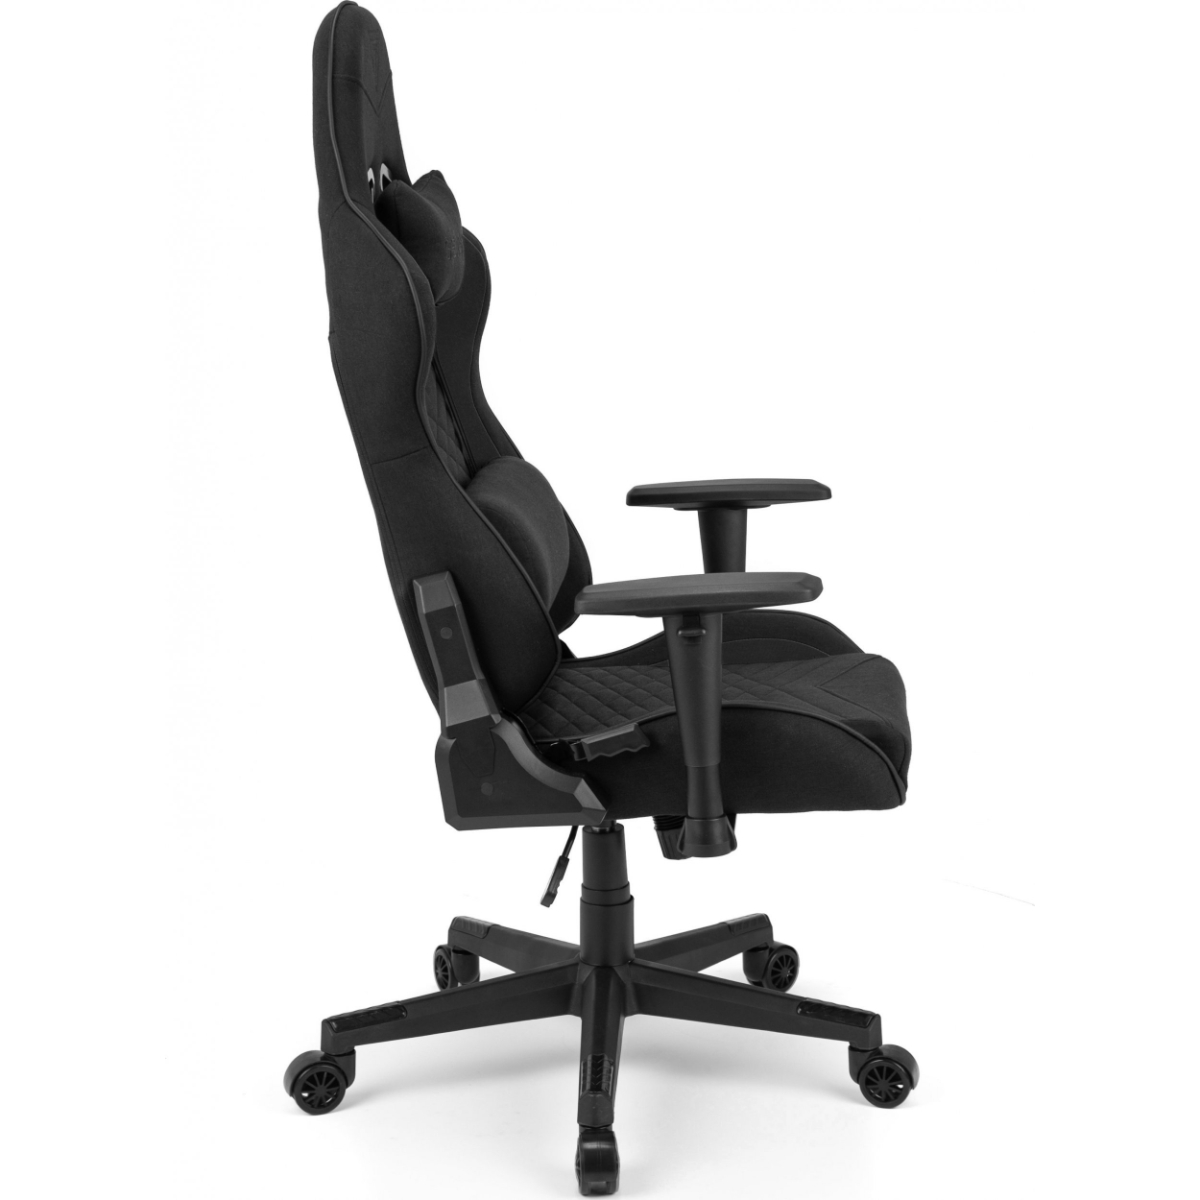 SENSE7 Spellcaster Fabric Gaming schwarz Stühle